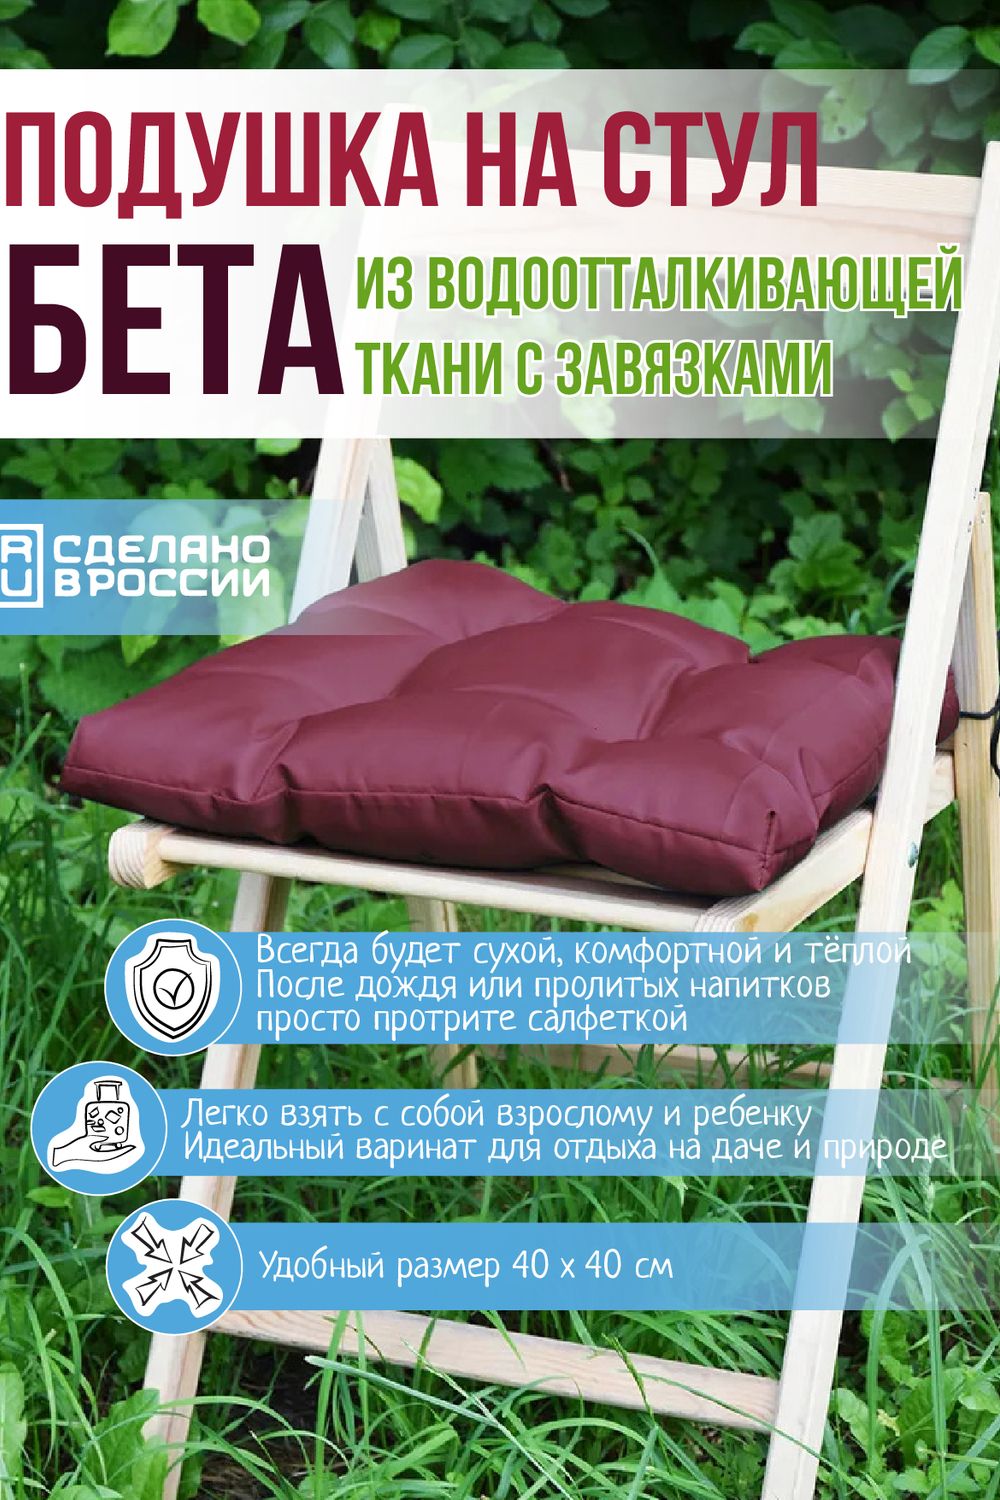 Подушка на сиденье Бета, р.40х40см - бордо